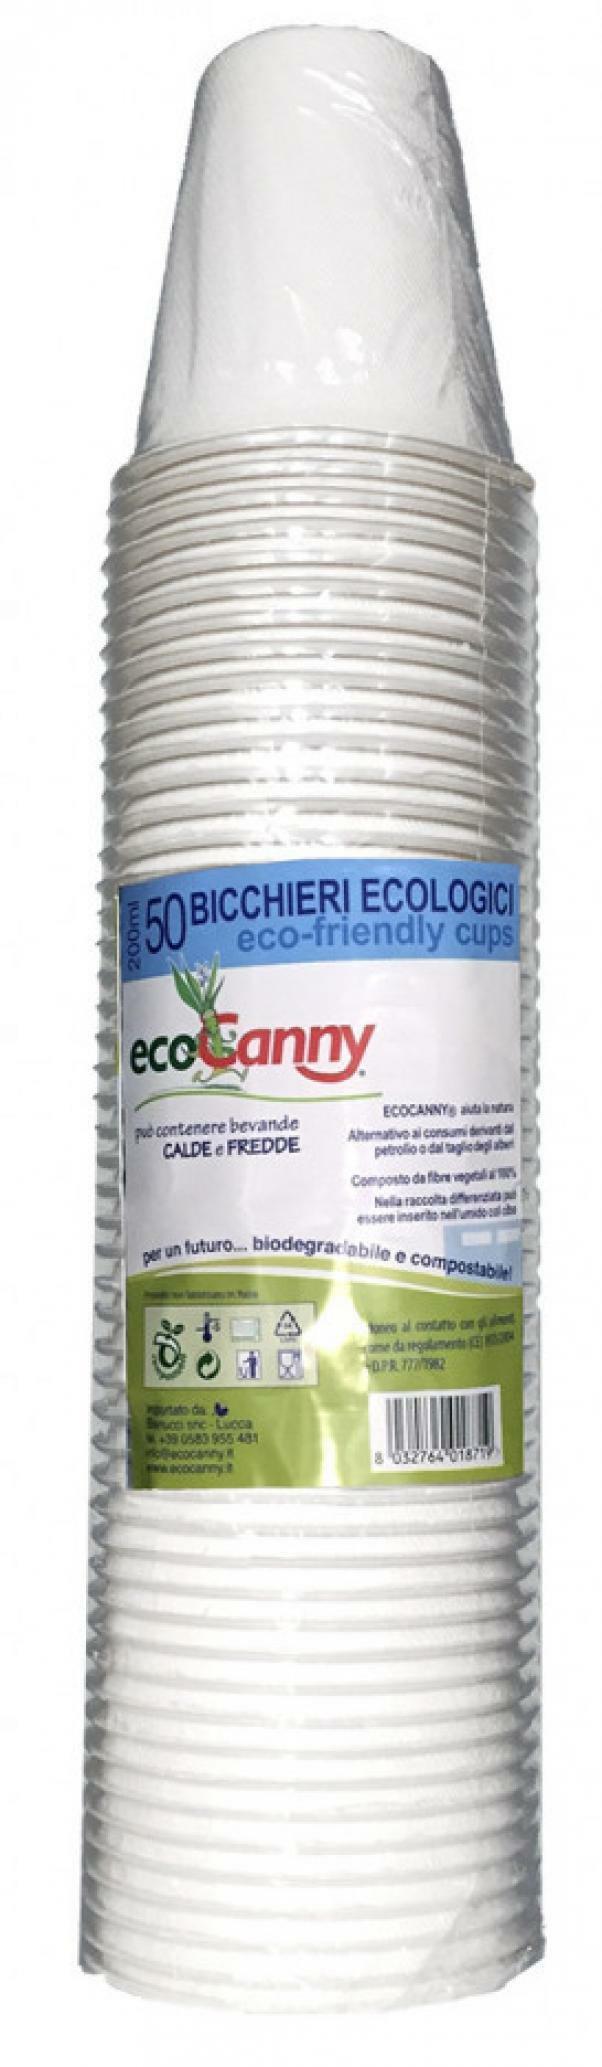 ecocanny eco bicchieri 200ml - 20 pack da 50 pz